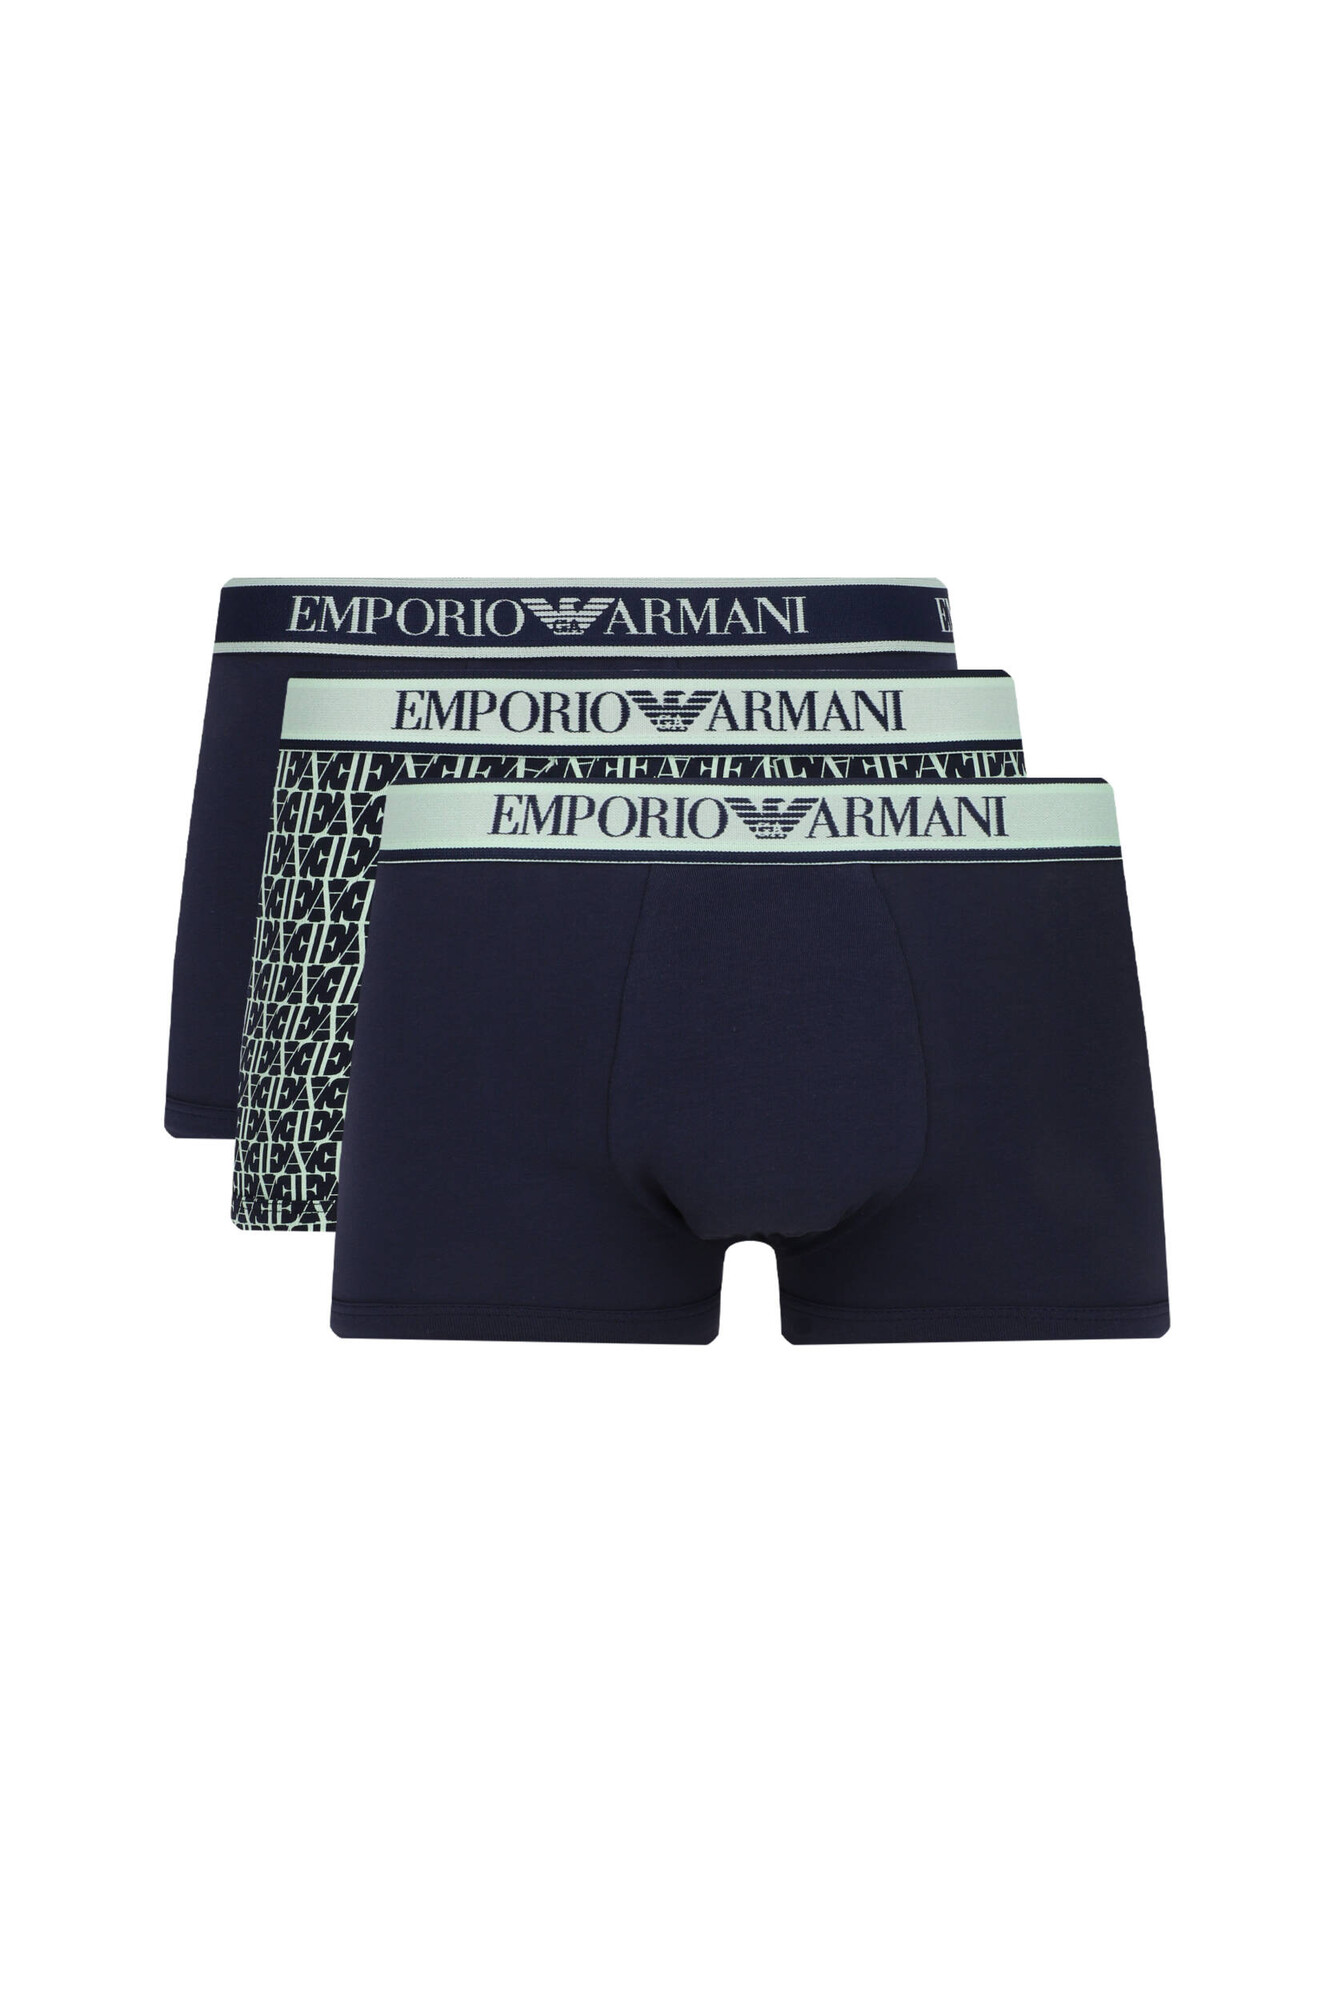 Pánské boxerky 3Pack 112130 4R717 tm. modré se zelenou - Emporio Armani XL